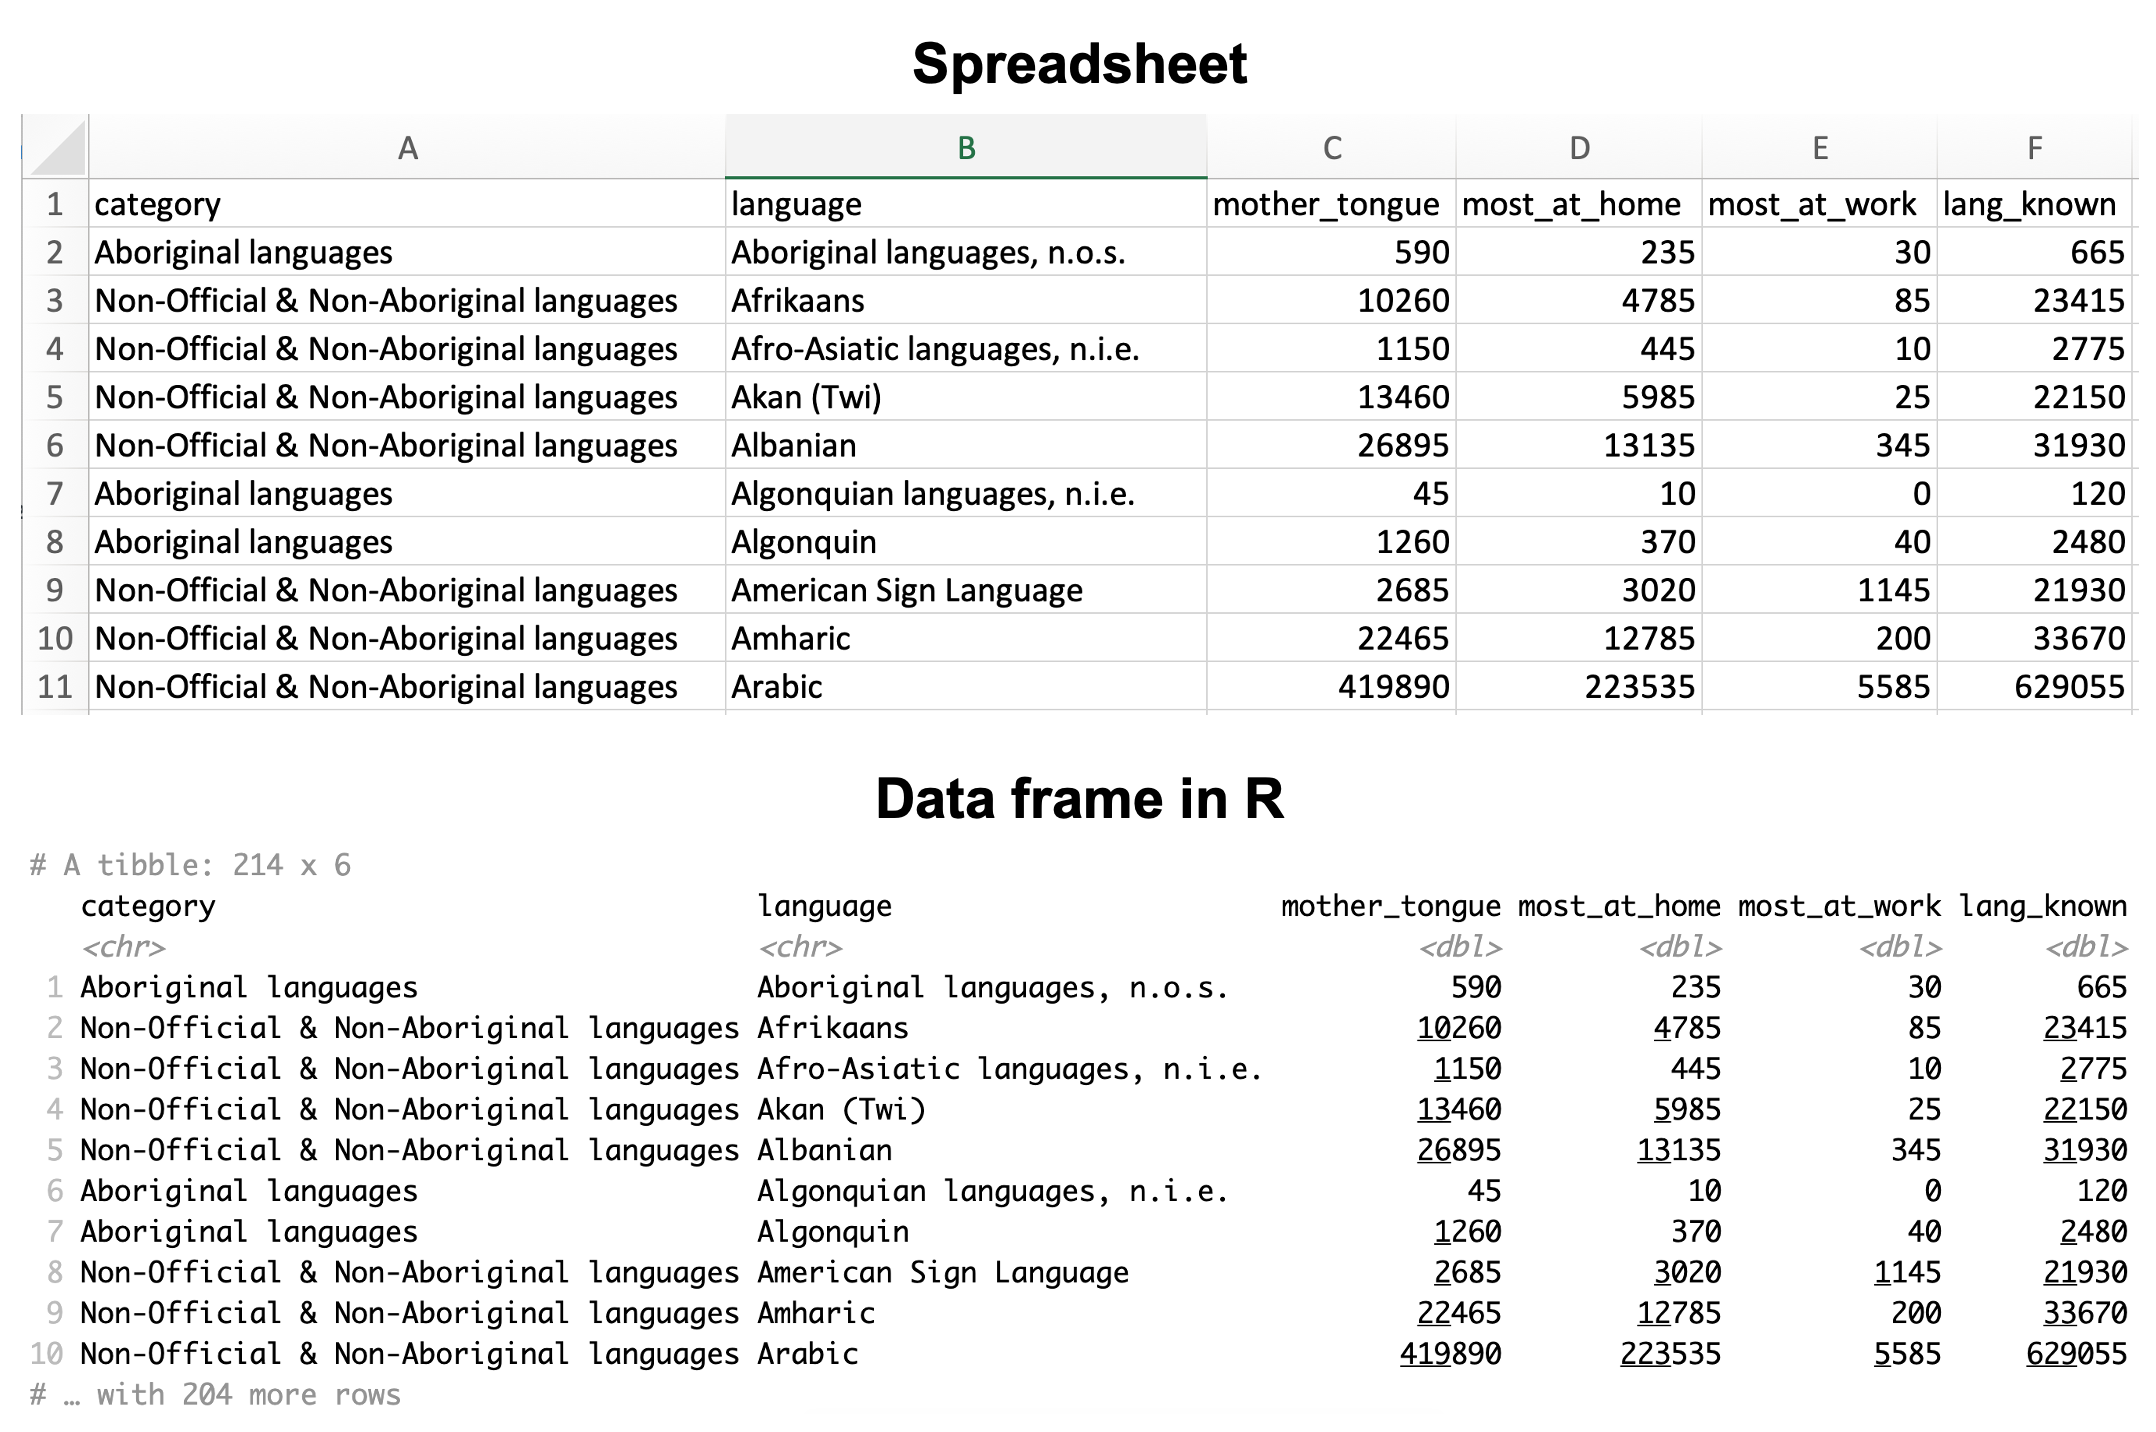 A spreadsheet versus a data frame in R.